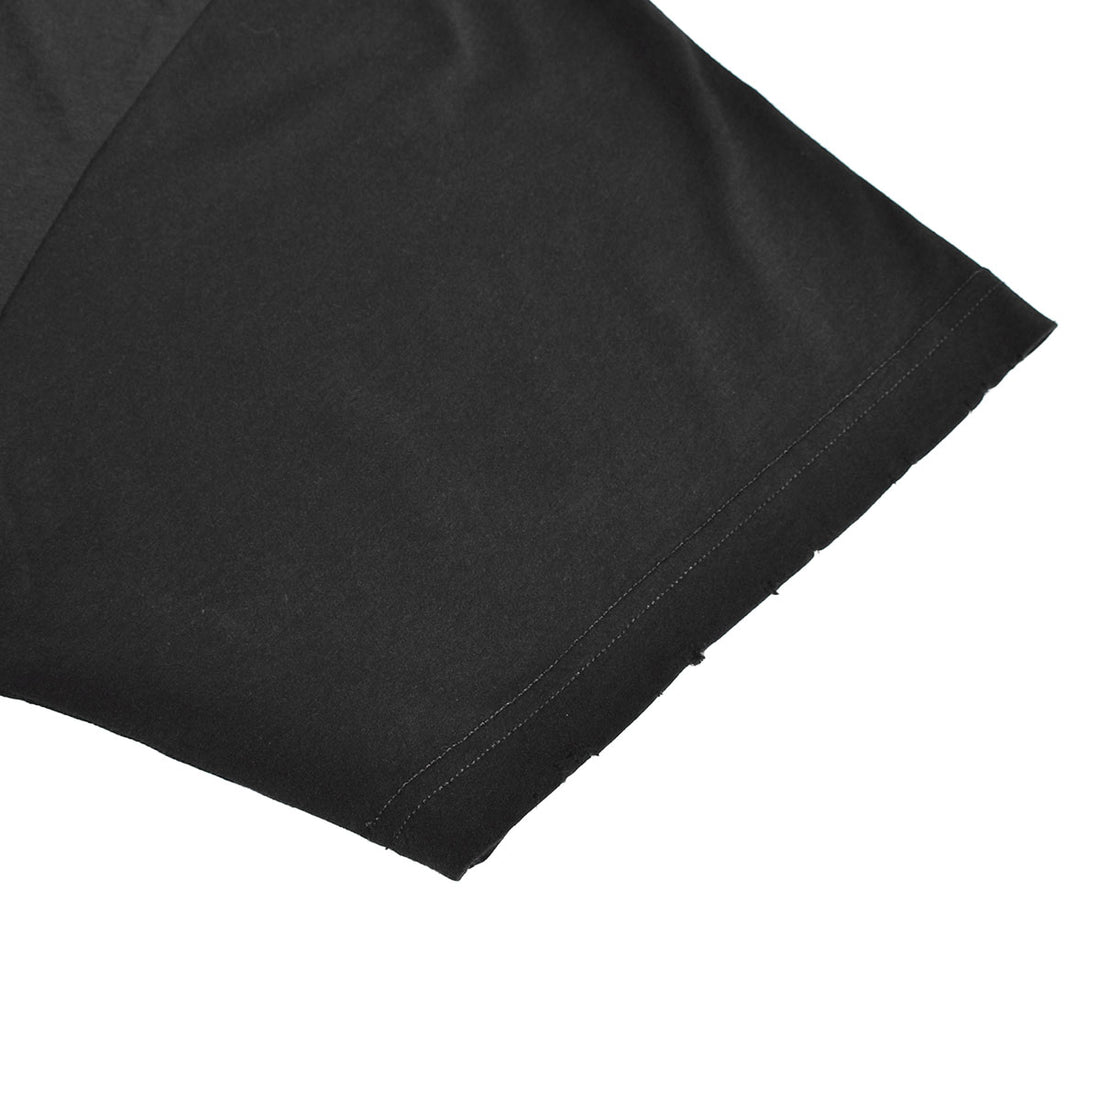 [BALENCIAGA]Medium Fit T-Shirt/BLACK(739784TOVF4)